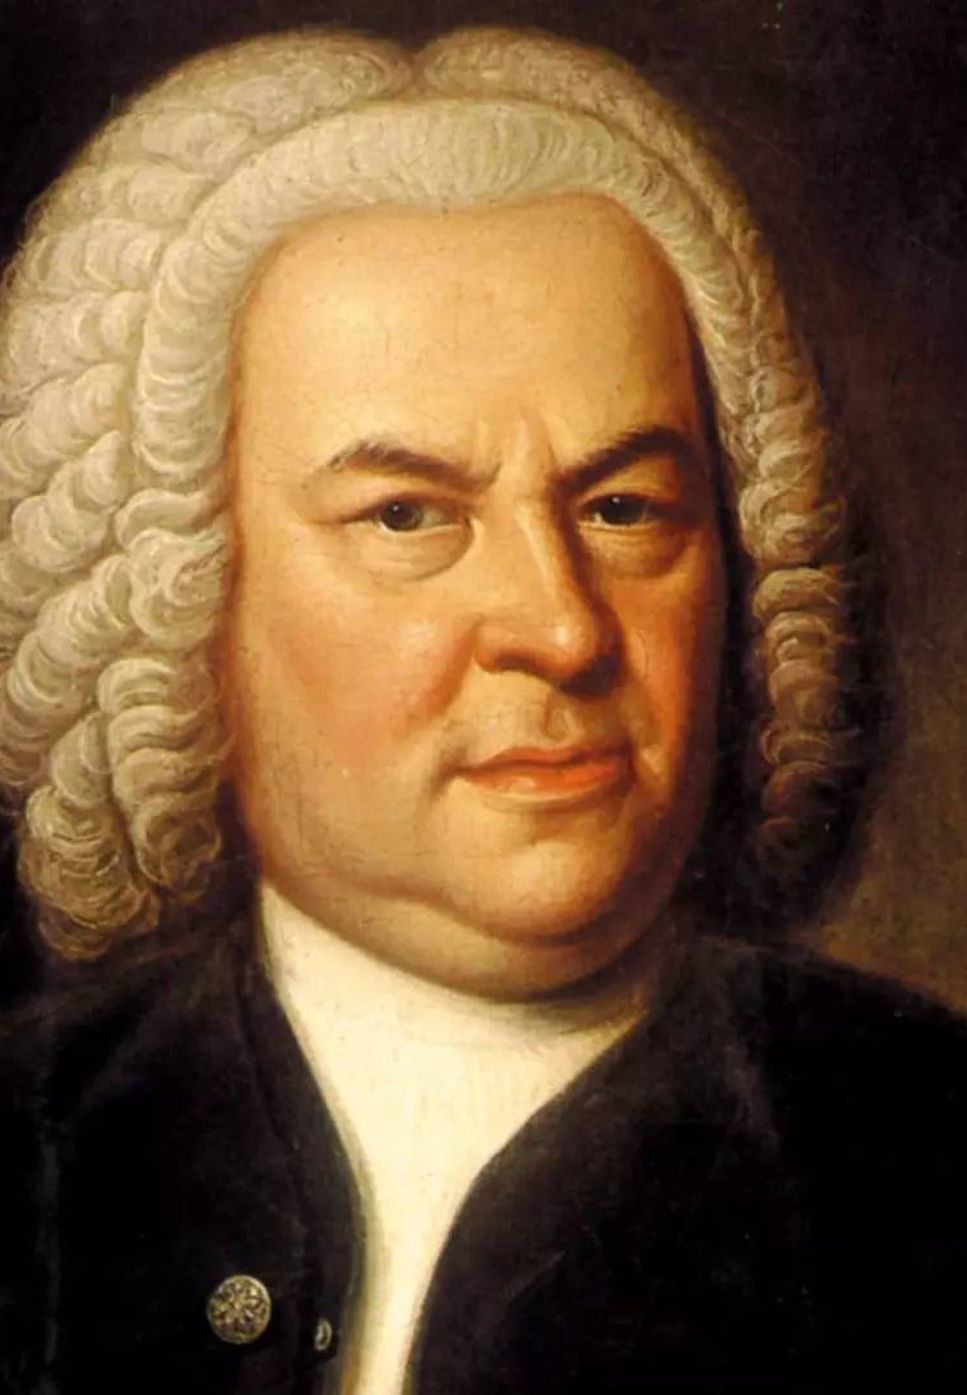 Johann Sebastian Bach - menuet en sol (For Easy / Beginner Piano With Finger) by poon